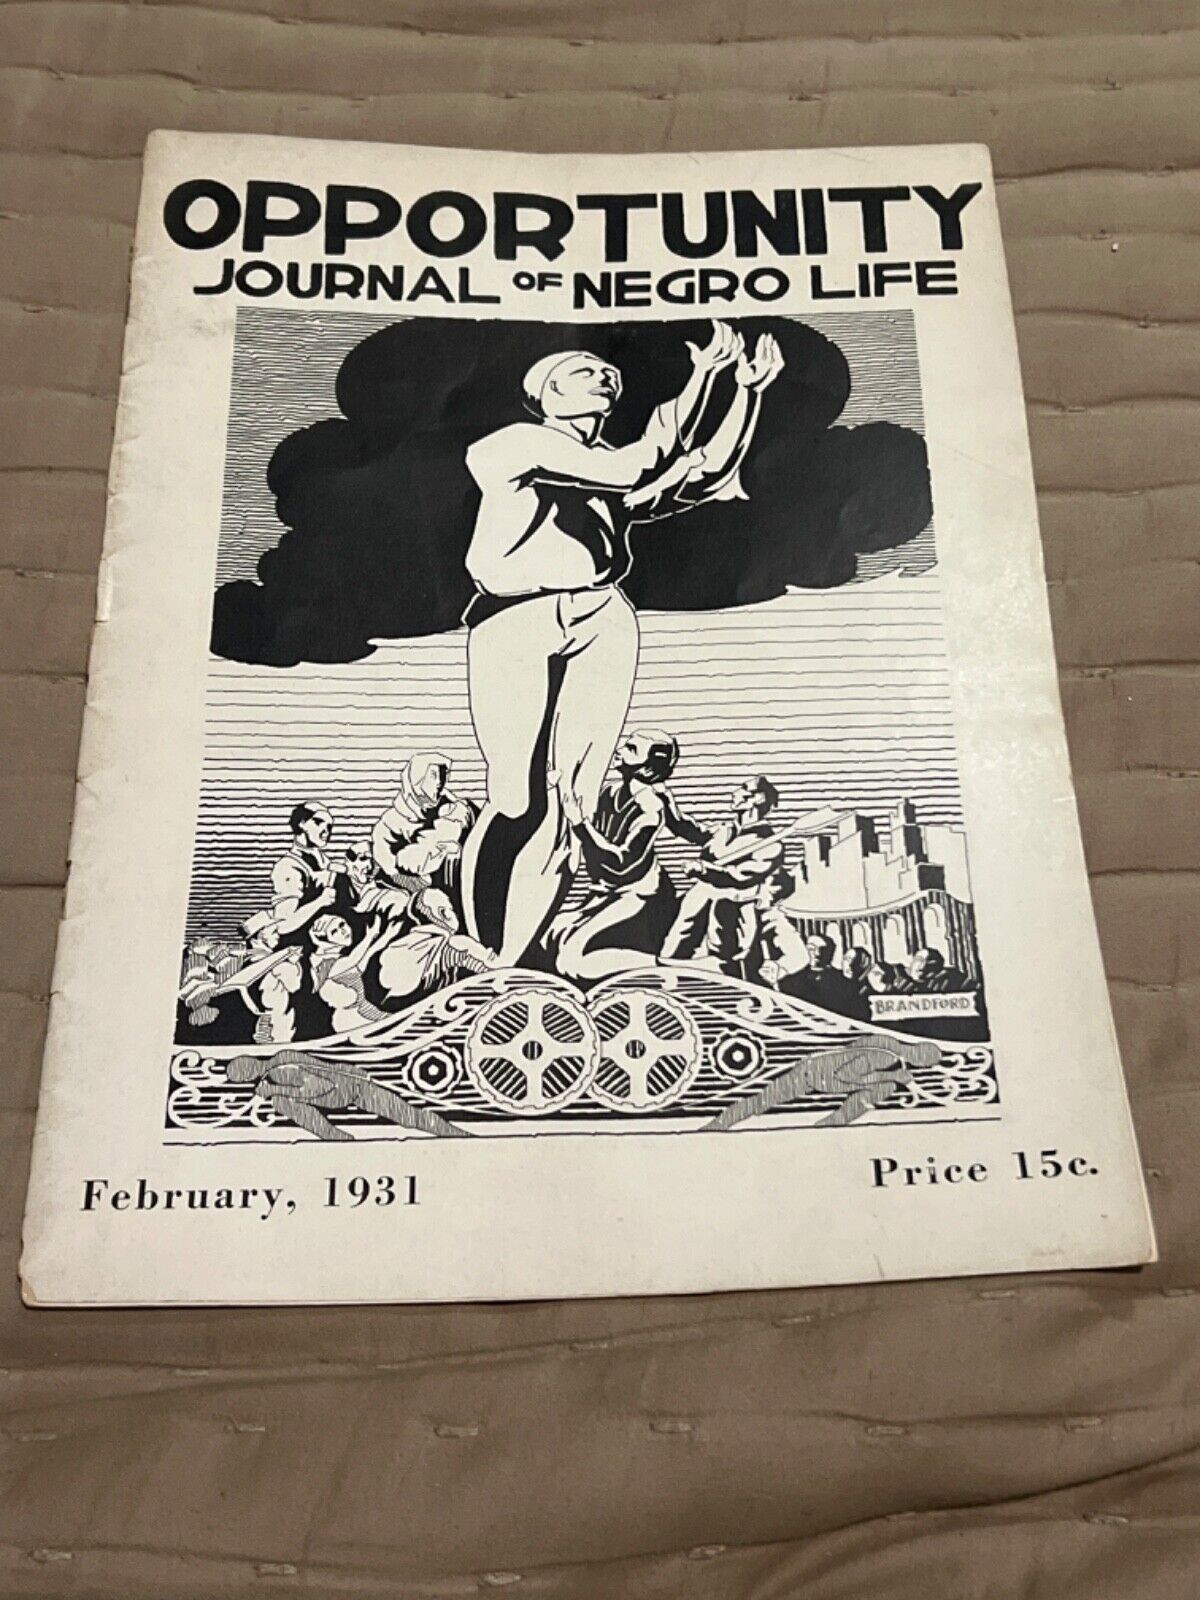 Rare Opportunity Journal of (Negro) Life Feb 1931